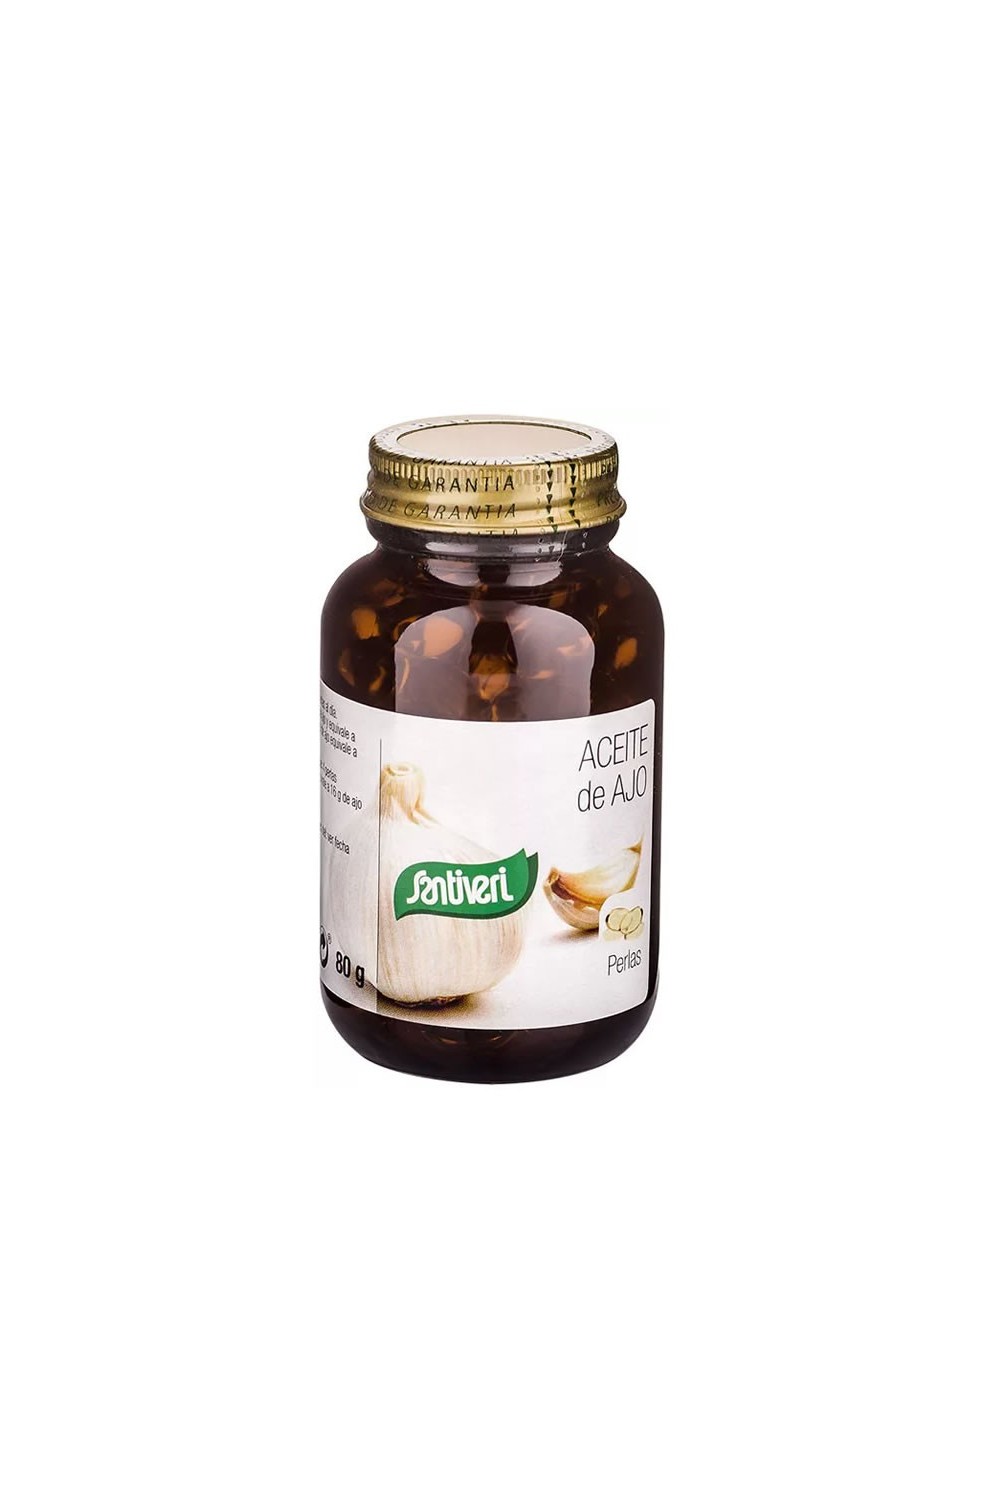 Santiveri Garlic Oil 115 Pearls